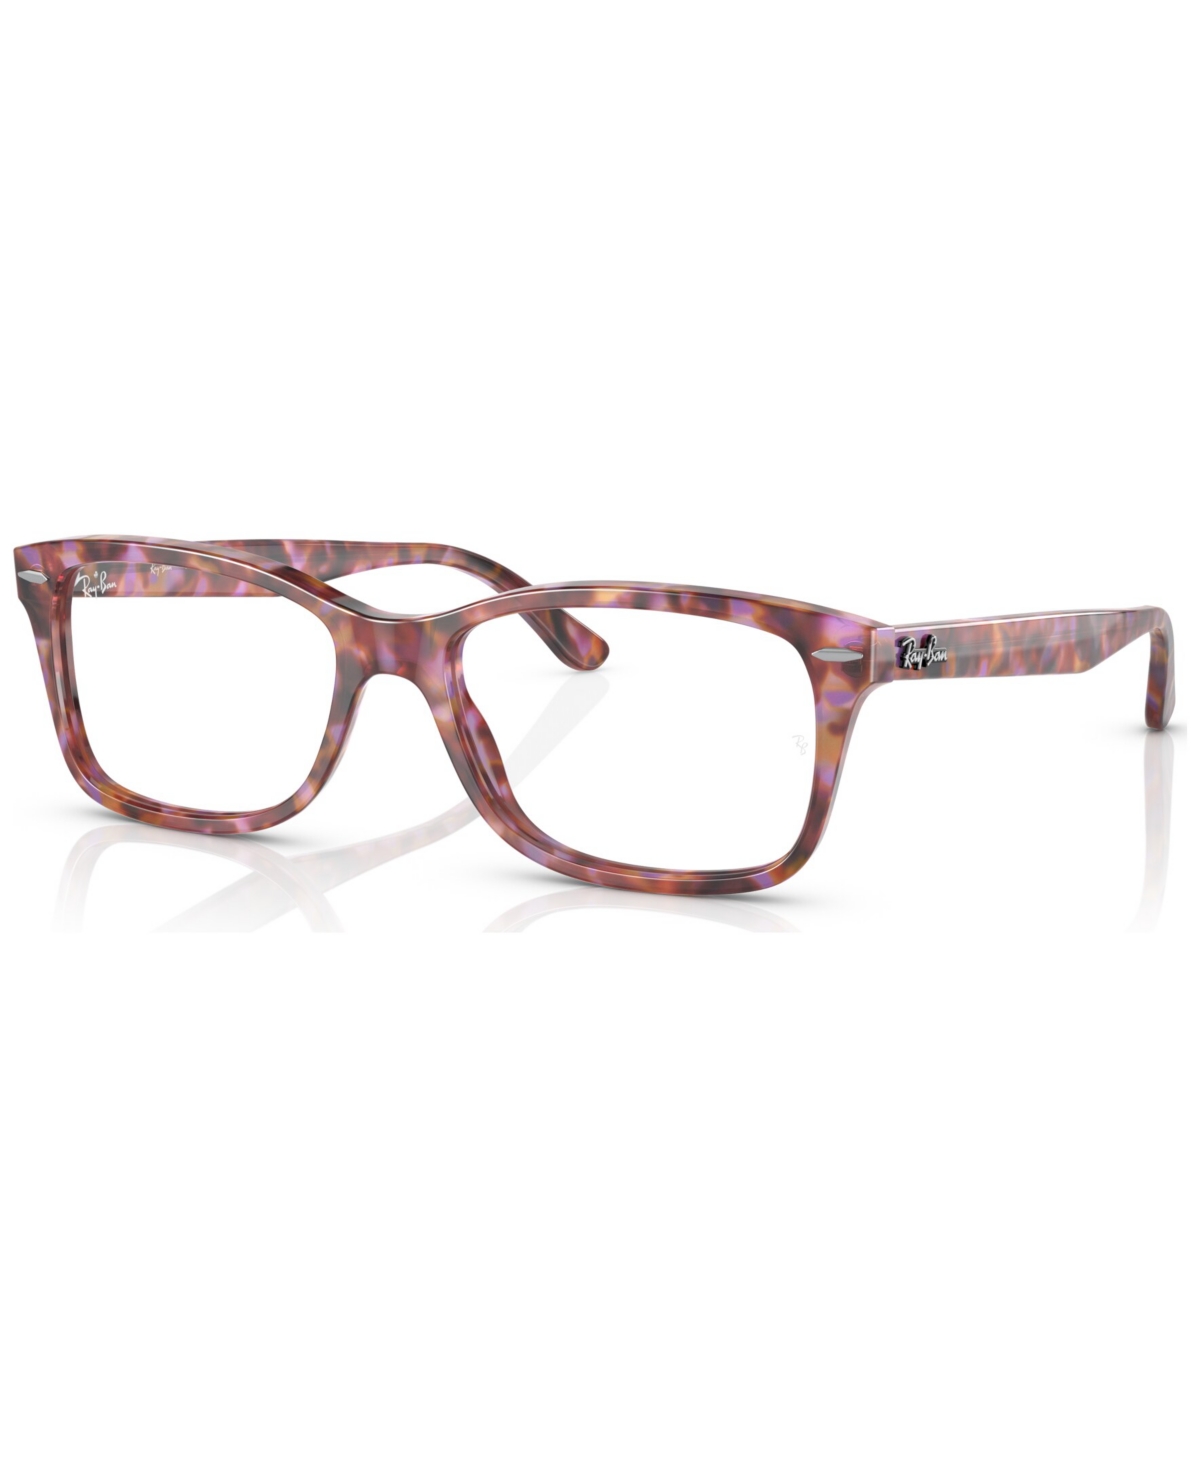 Unisex Square Eyeglasses, RX542855-o - Red